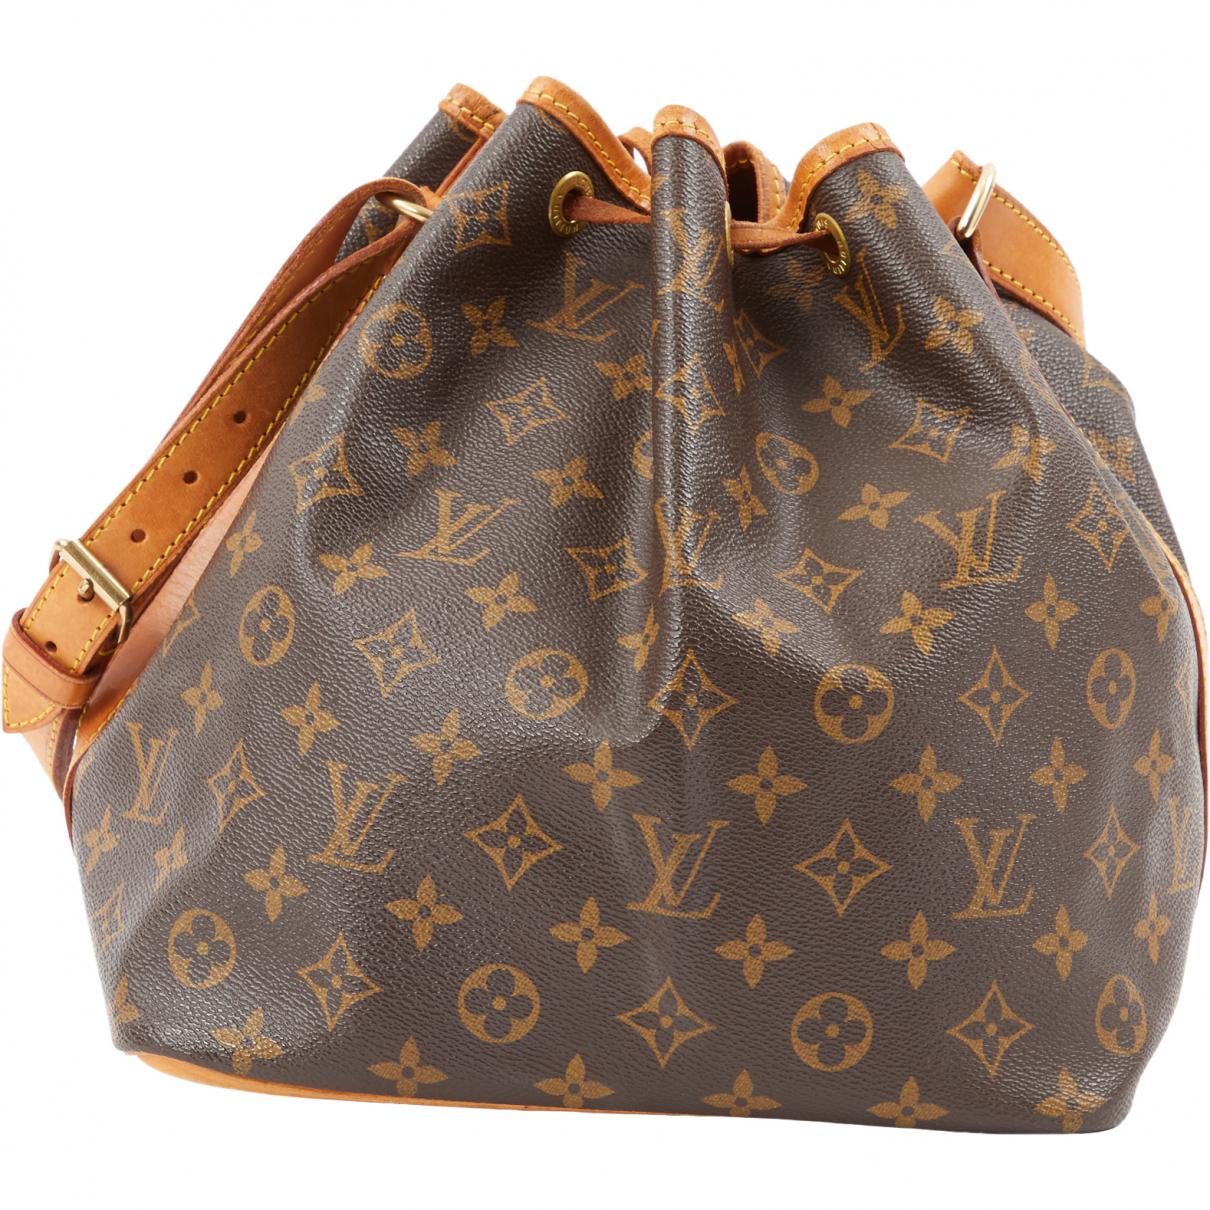 Lyst - Louis Vuitton Pre-owned Vintage Bucket Brown Leather Handbag in Brown